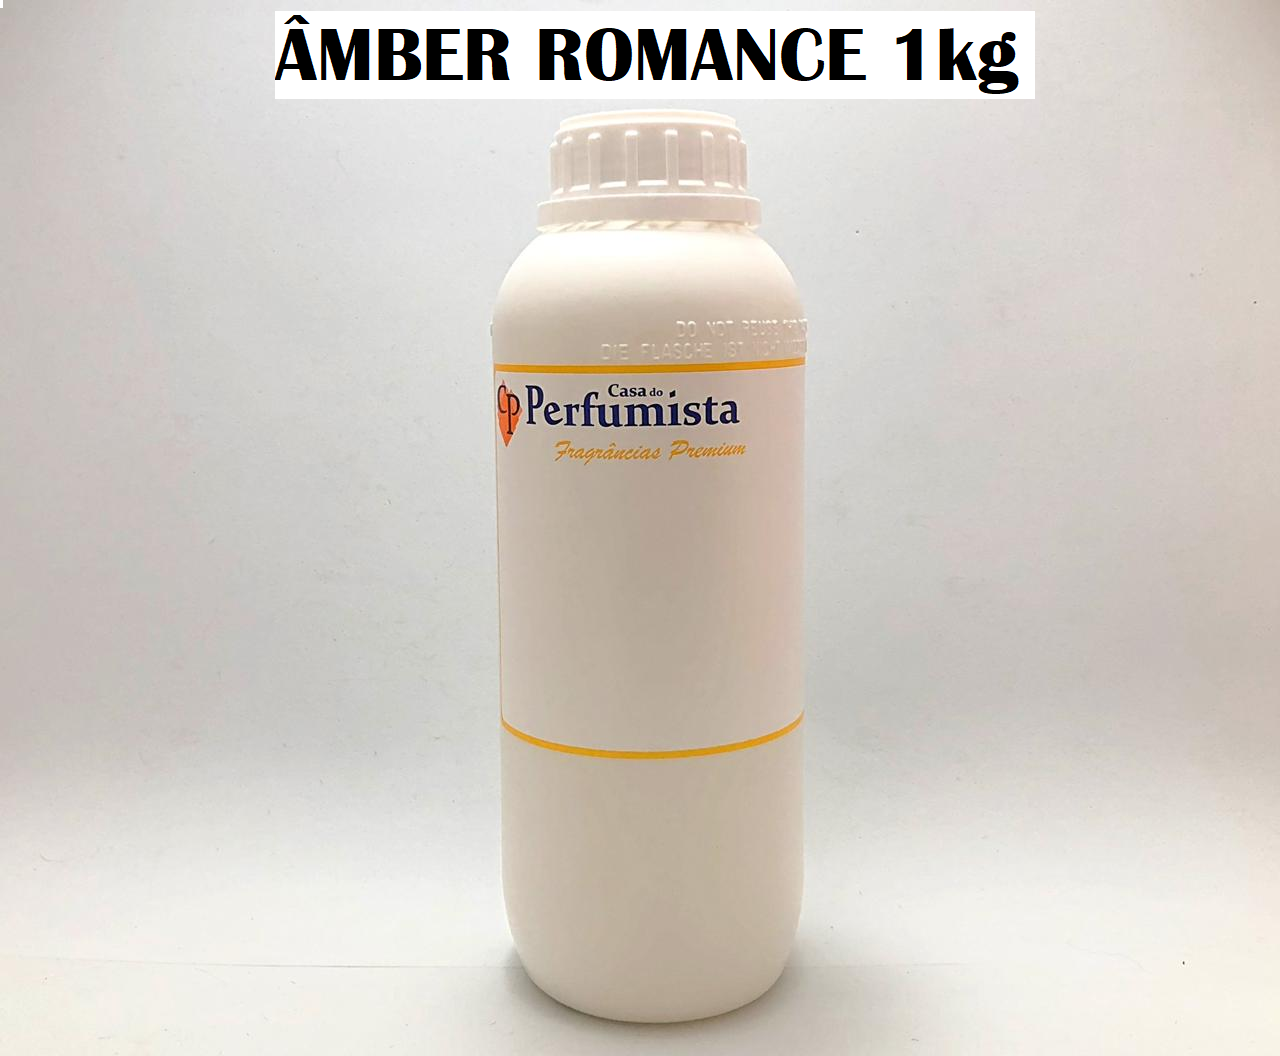 ÂMBER ROMANCE - 1kg